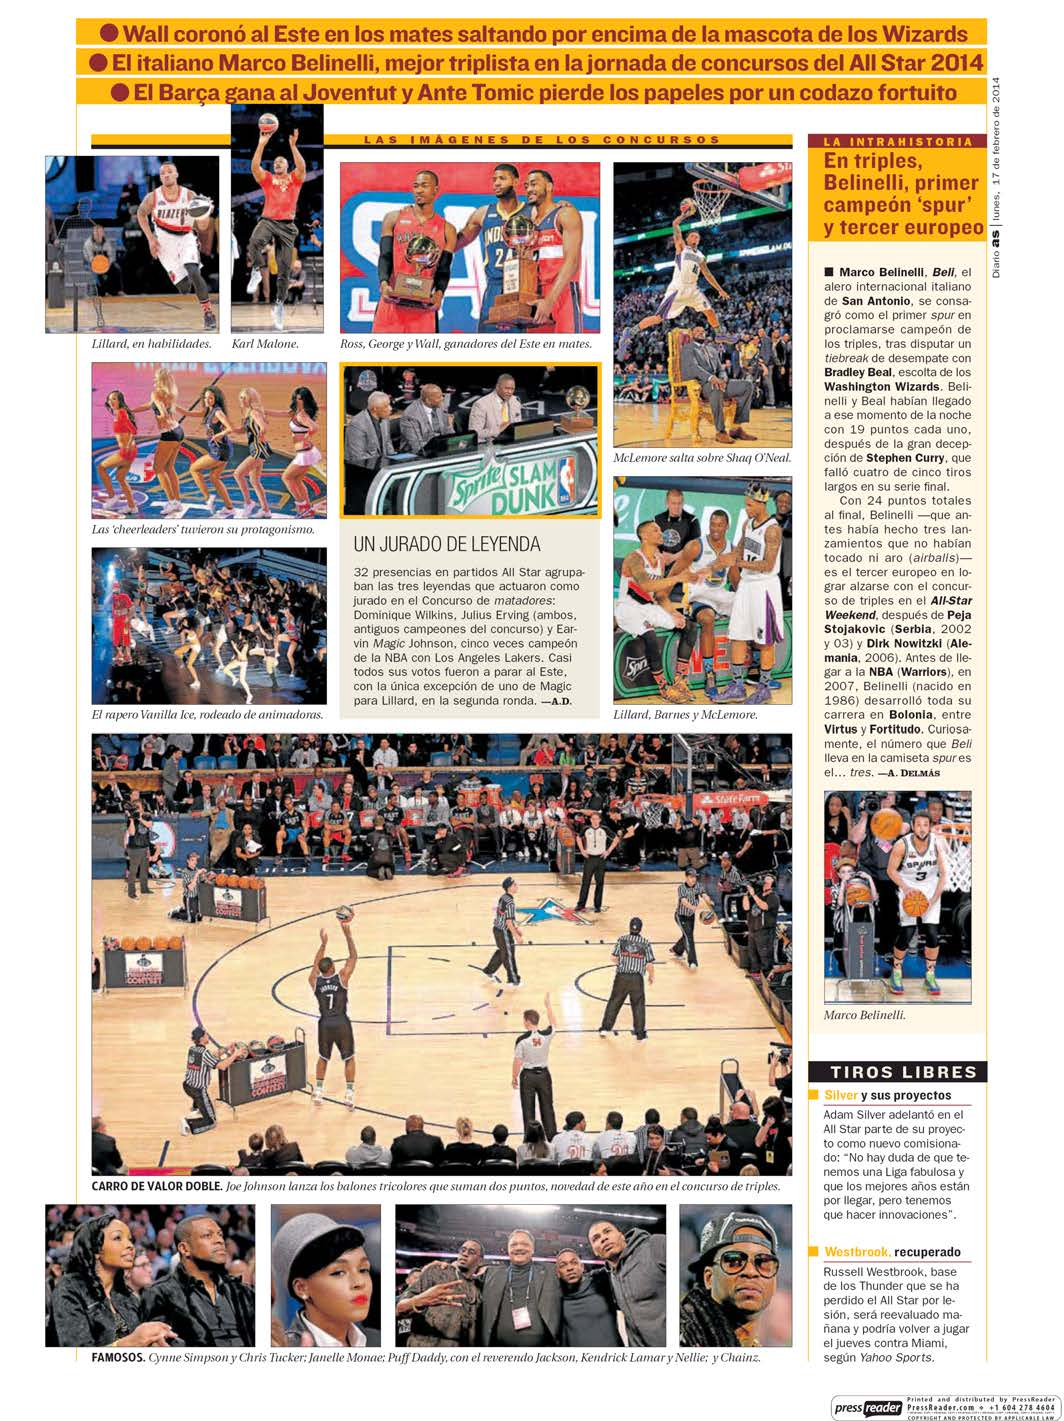 17/2/2014 Kiosko y Más - AS (Madrid) - 17 feb. 2014 - Page #39 http://lector.kioskoymas.